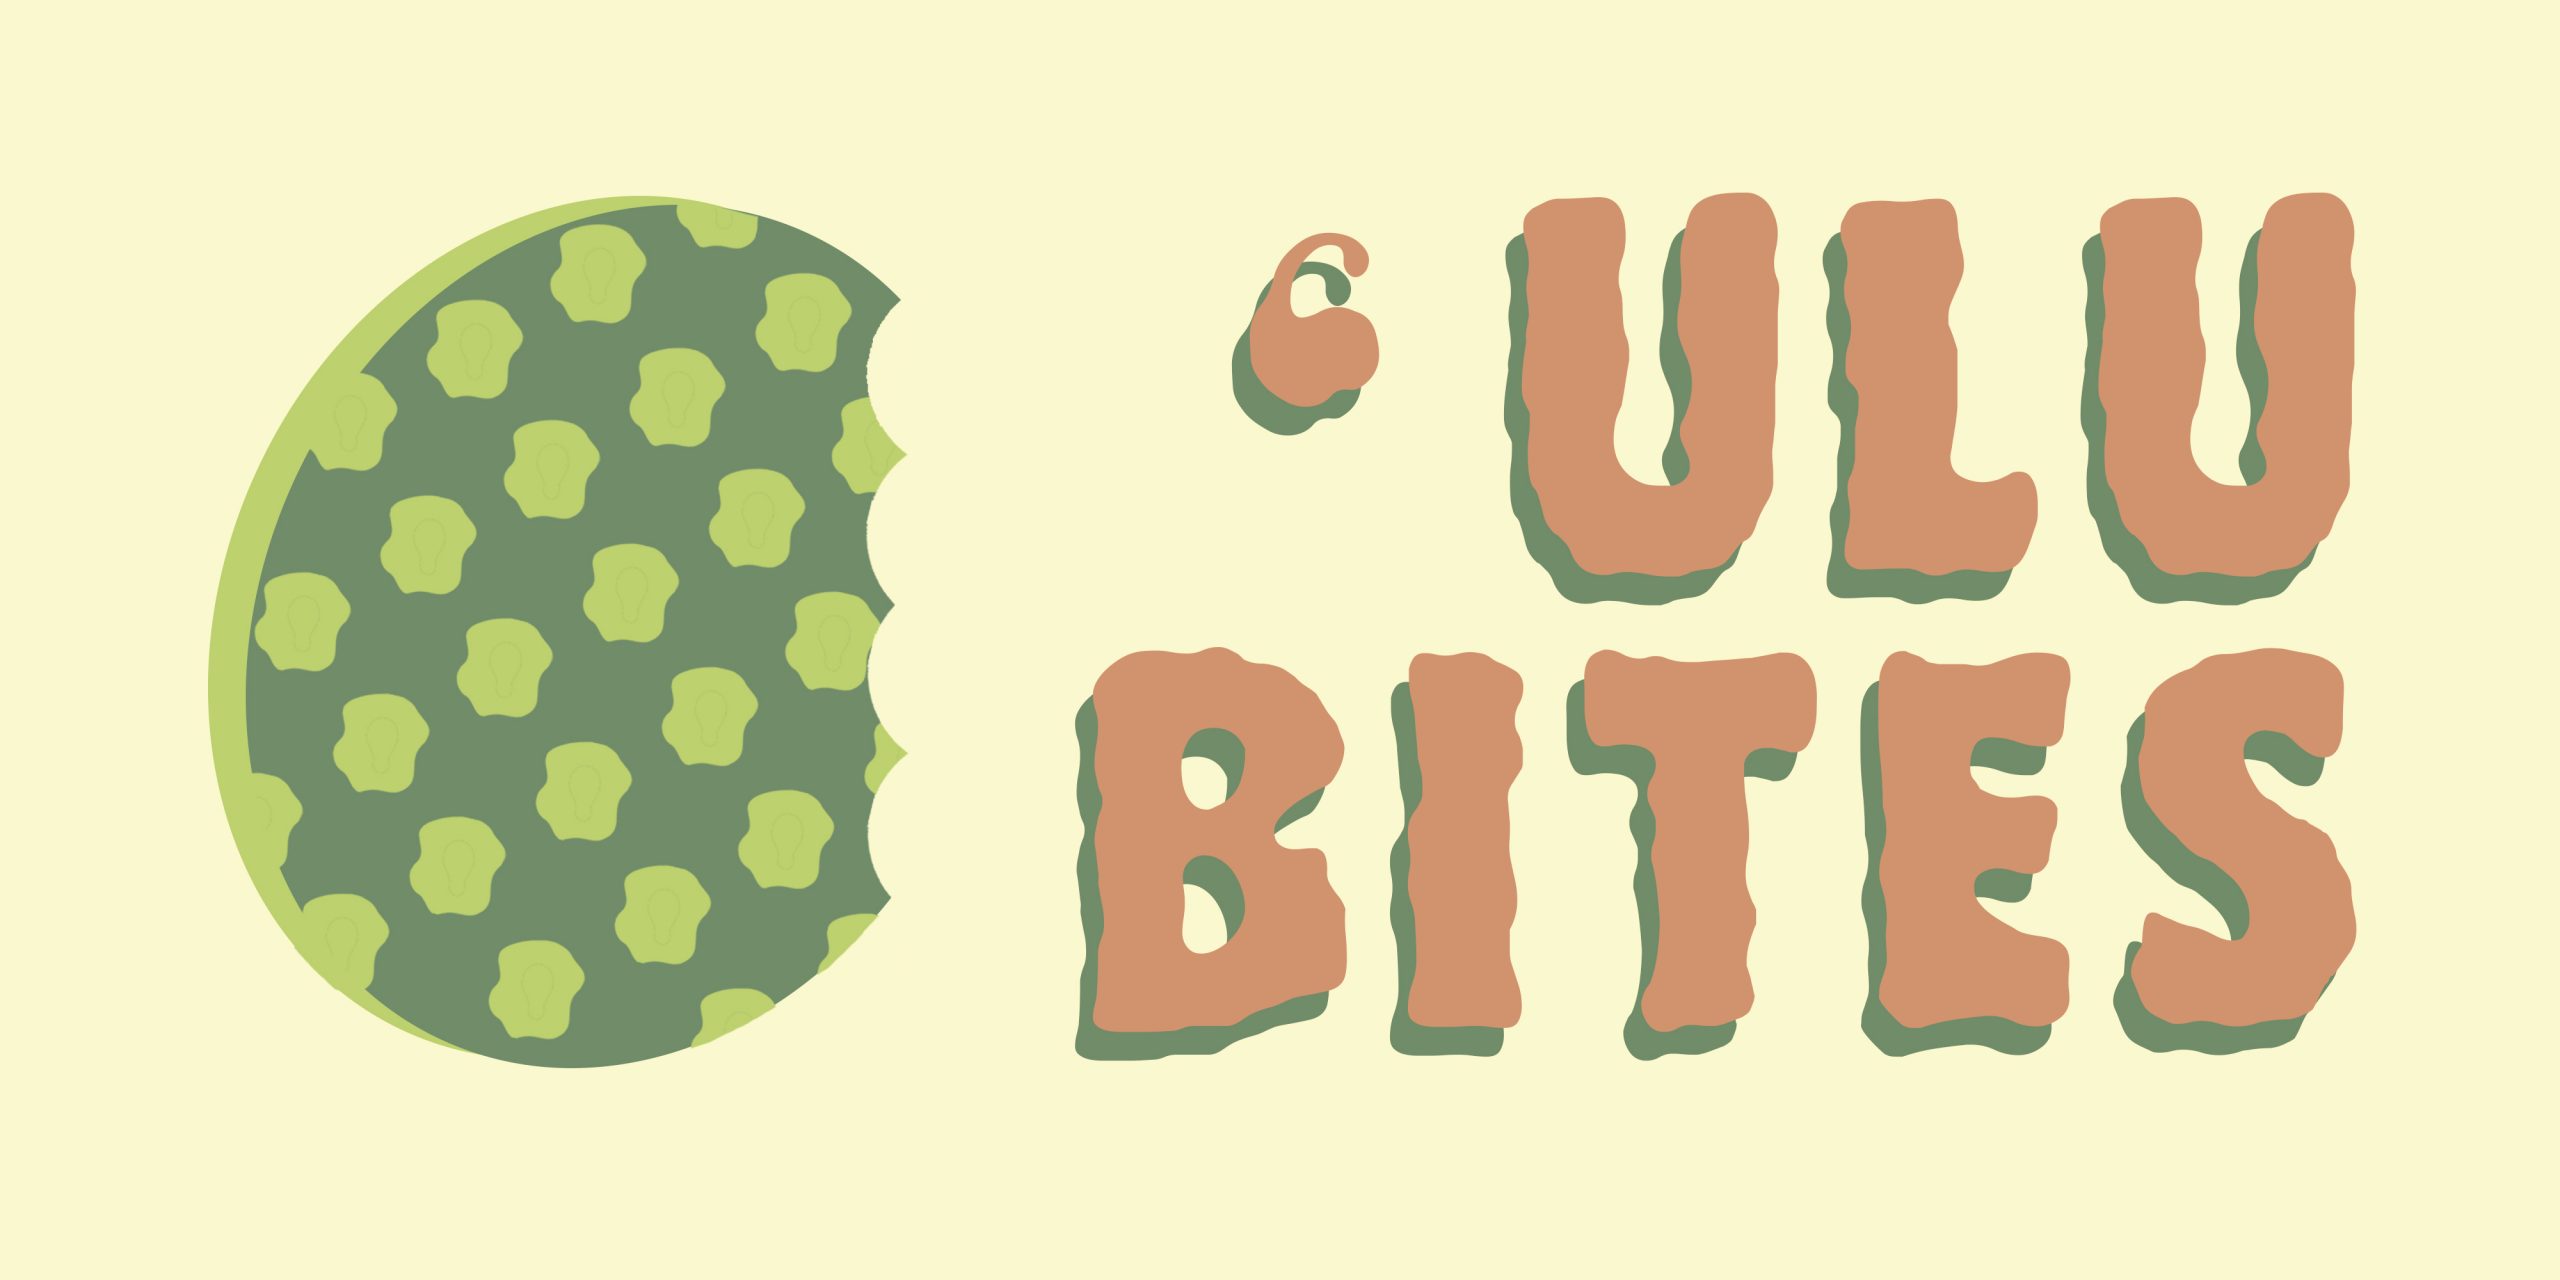 ʻUlu Bites e-newsletter logo with bite taken out of ʻulu